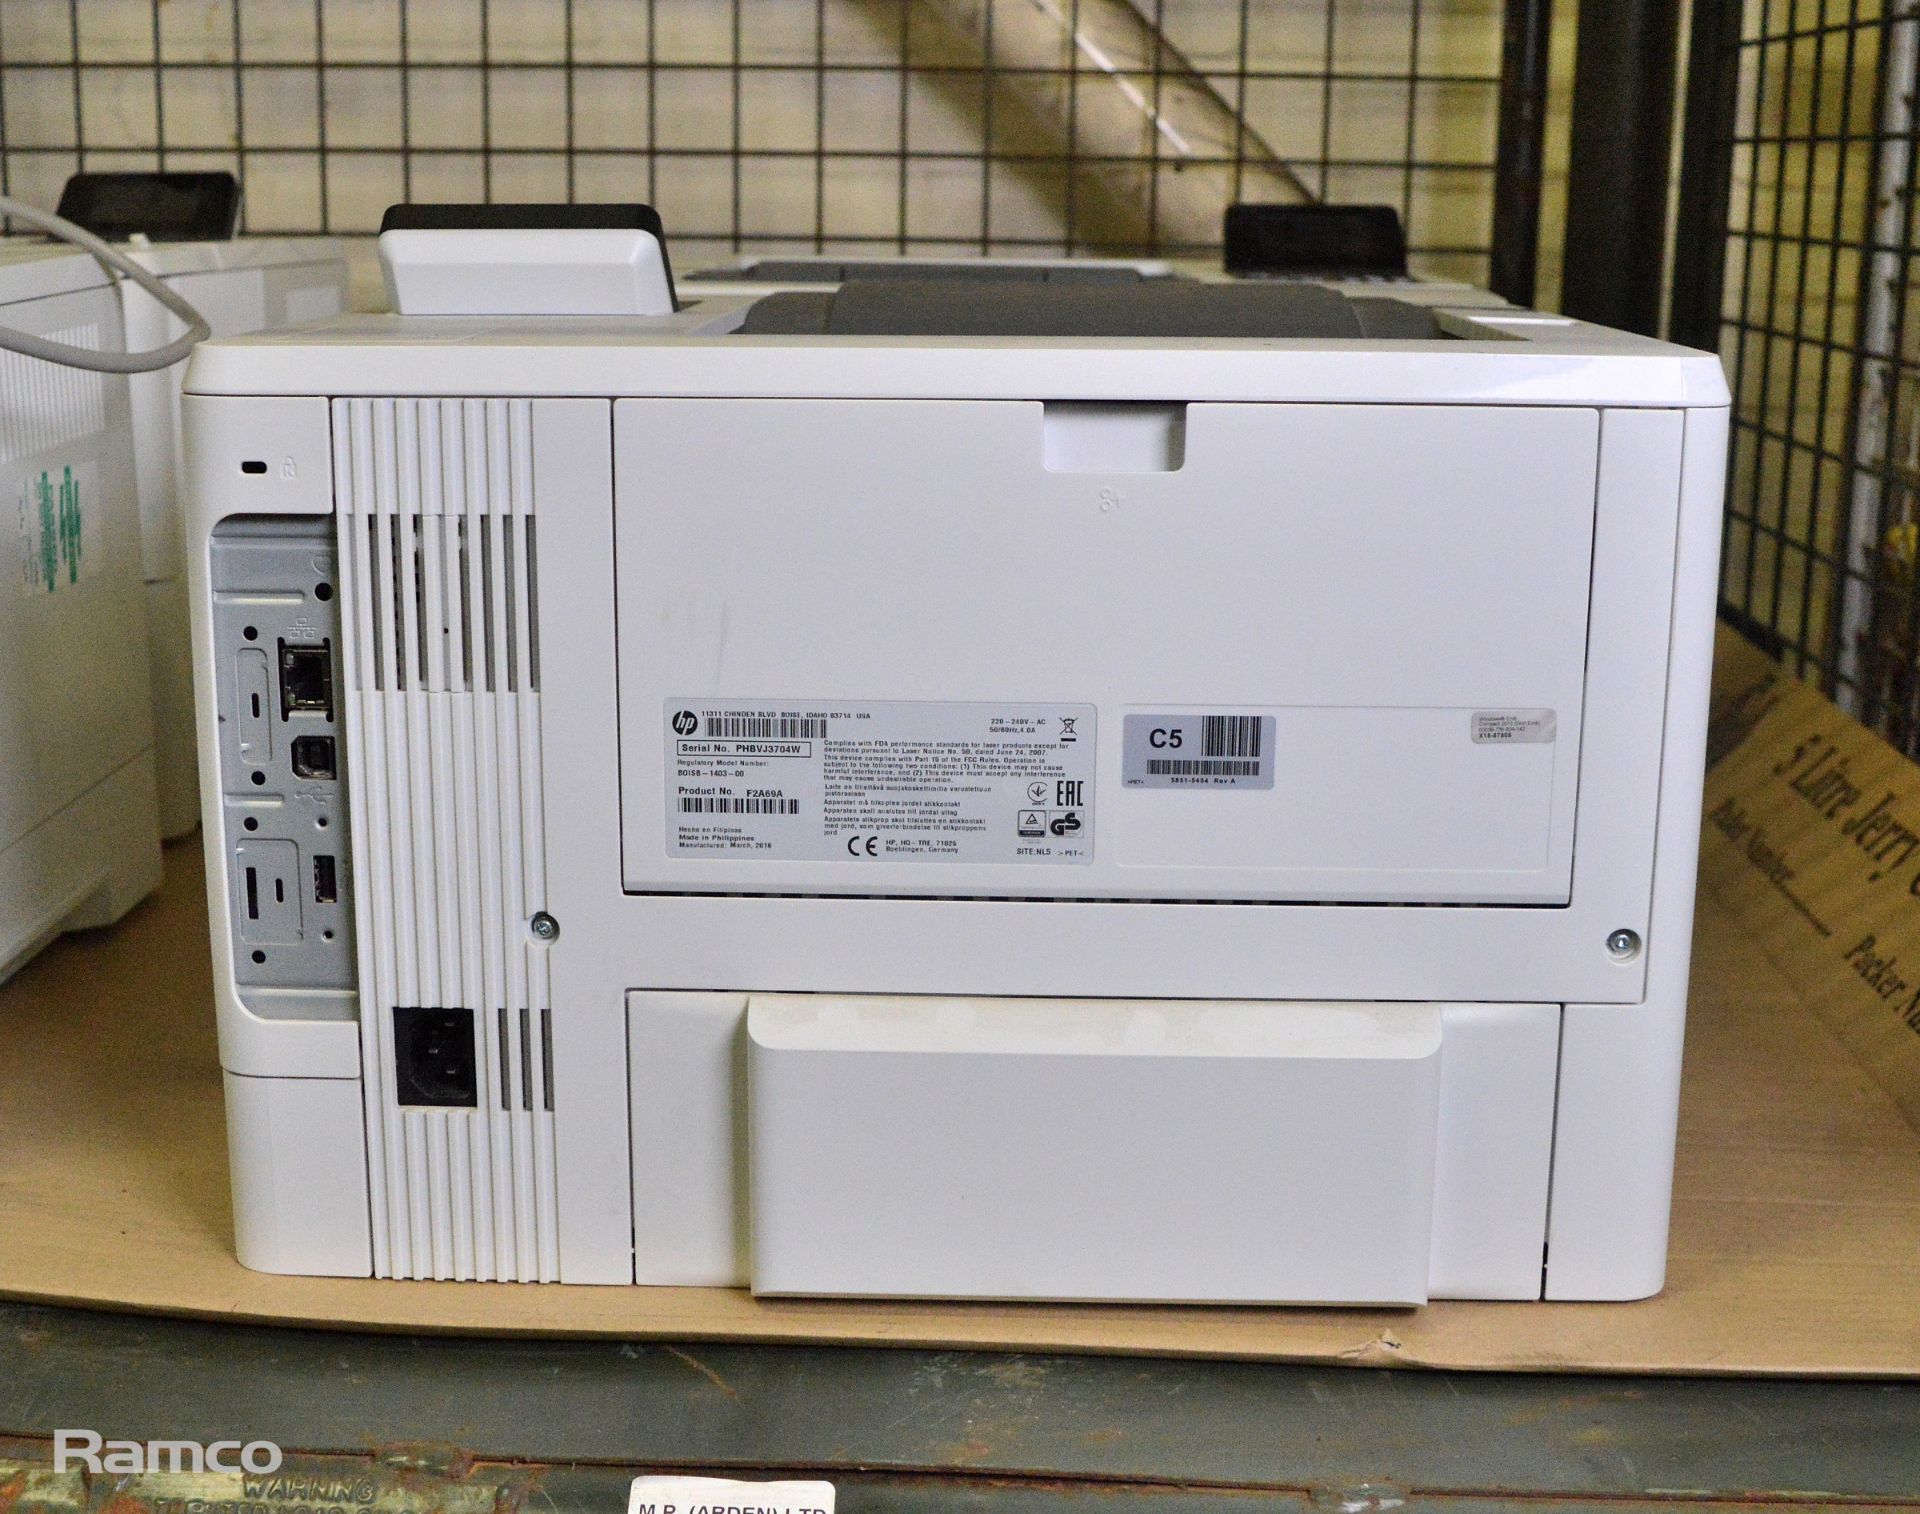 4x HP Laserjet Enterprise M506 Printers - Image 3 of 4